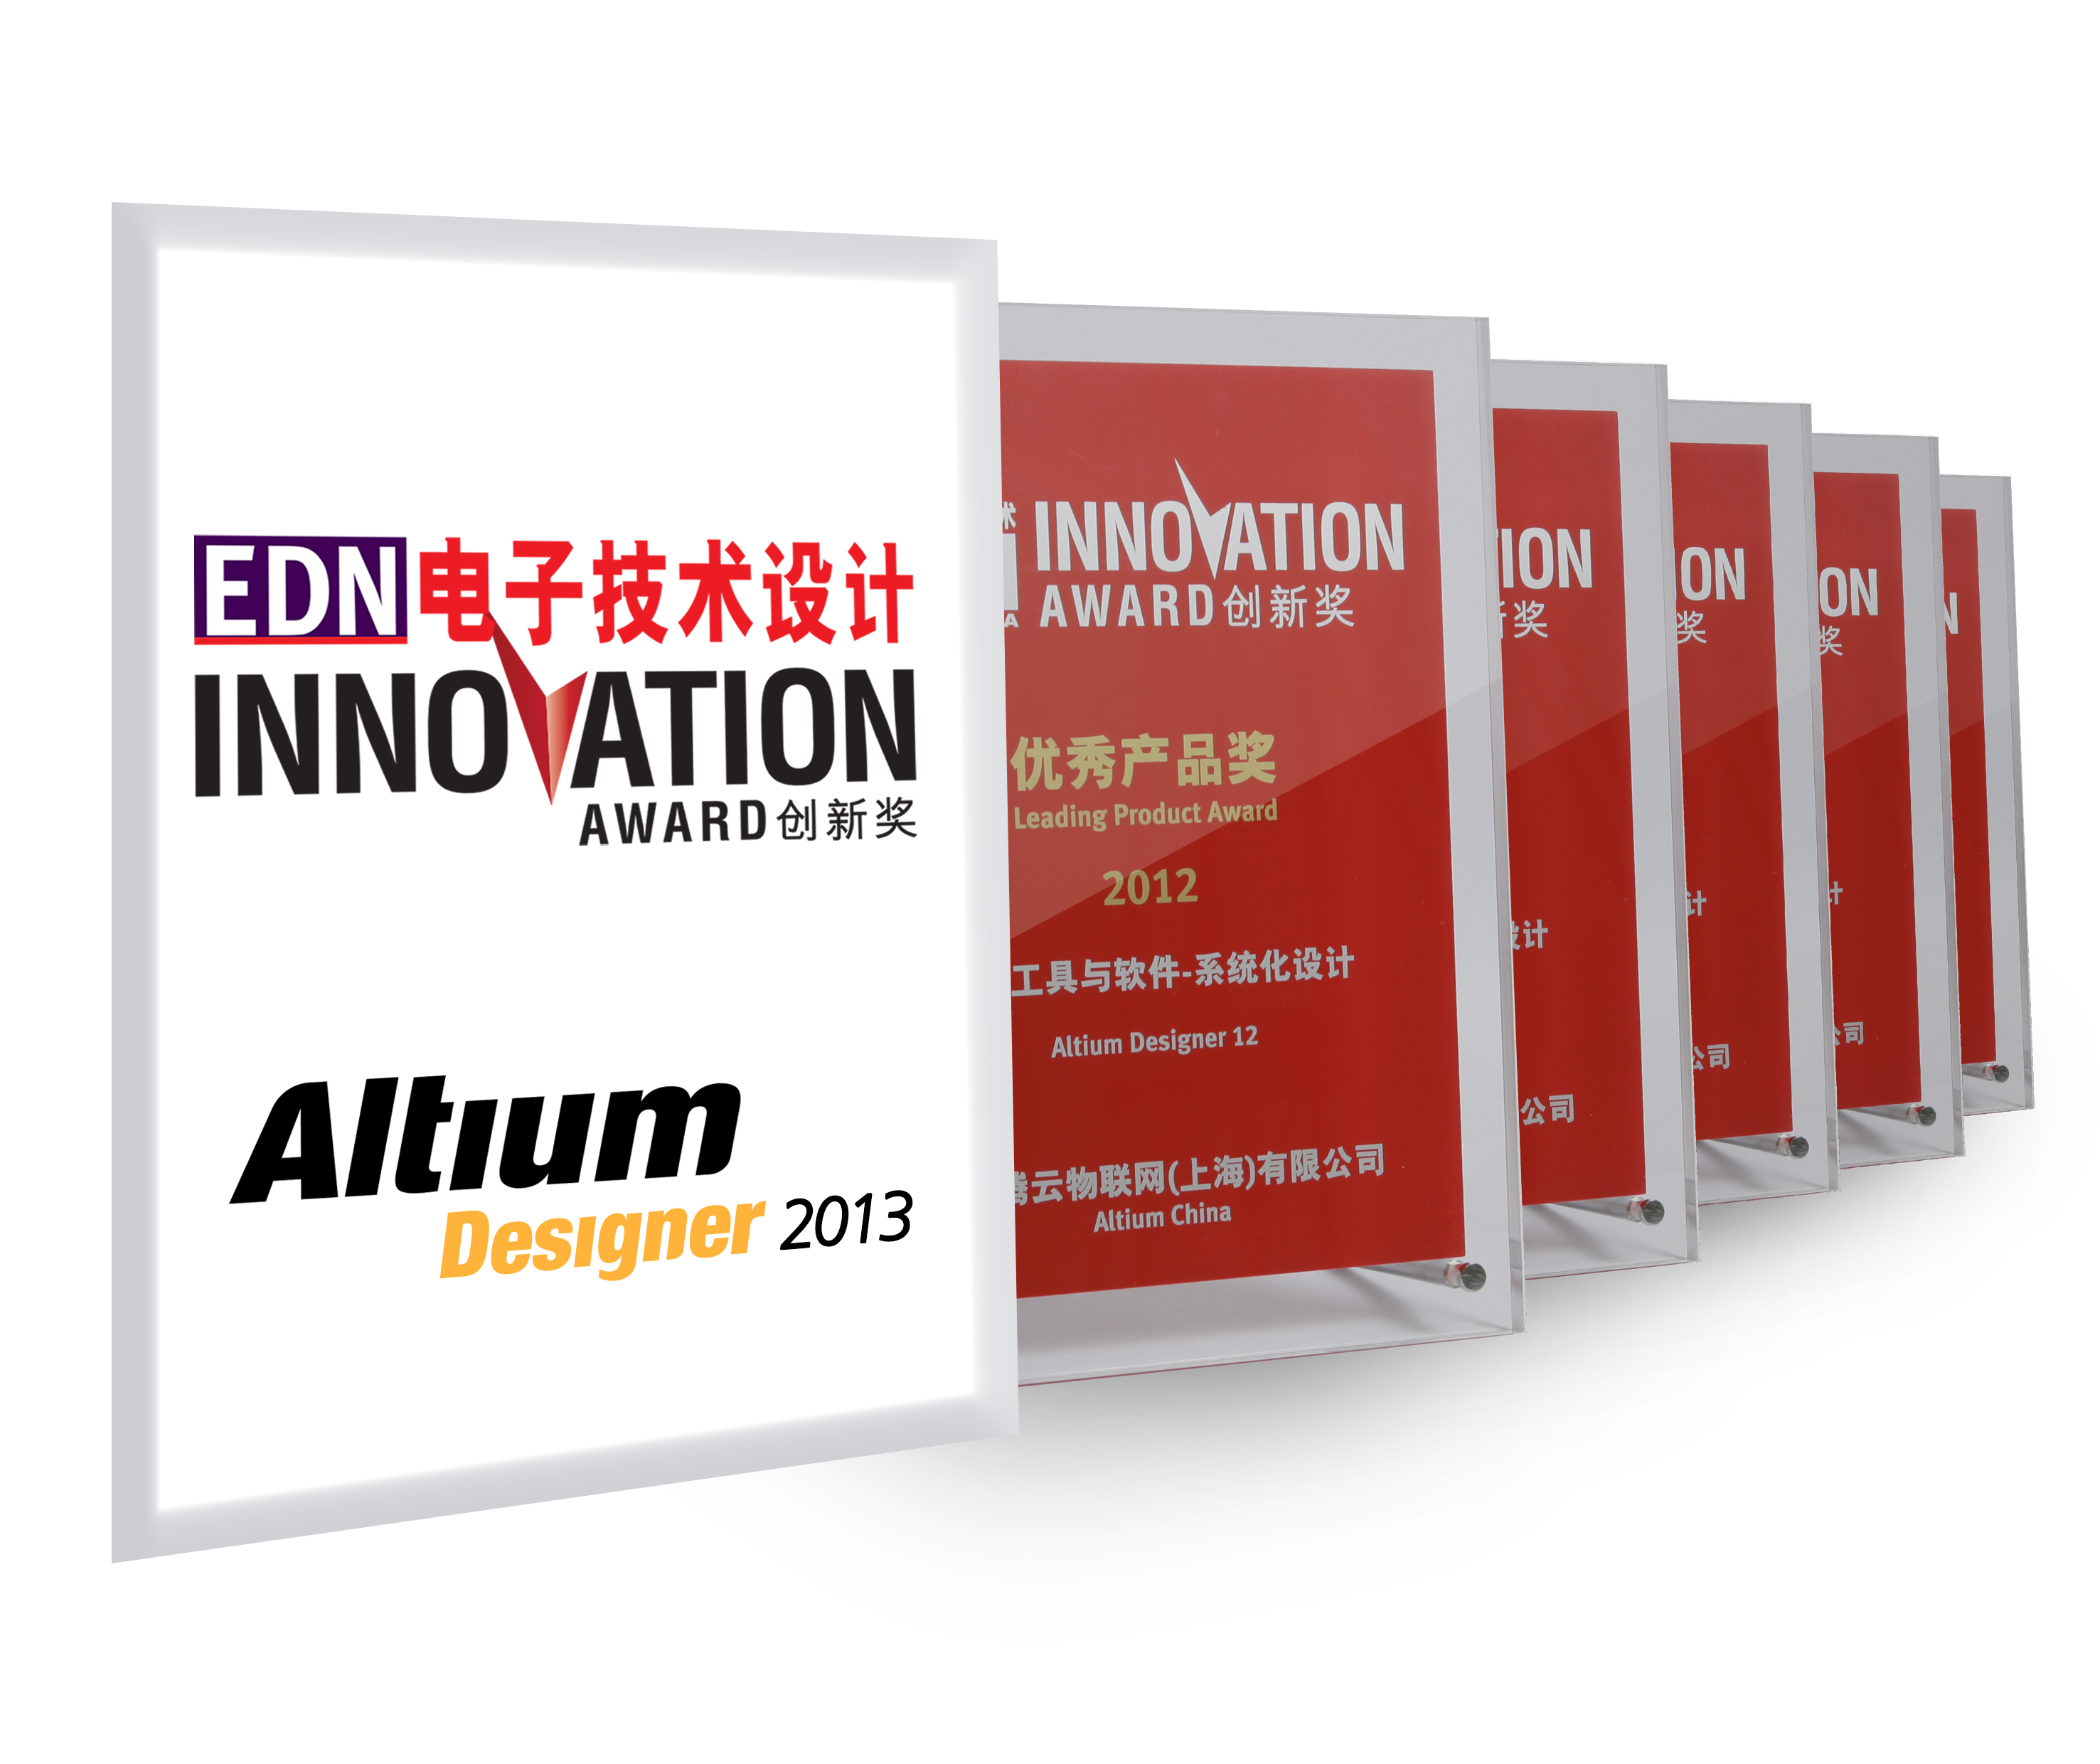 Altium Wins EDN China Innovation Award for Sixth Consecutive Year